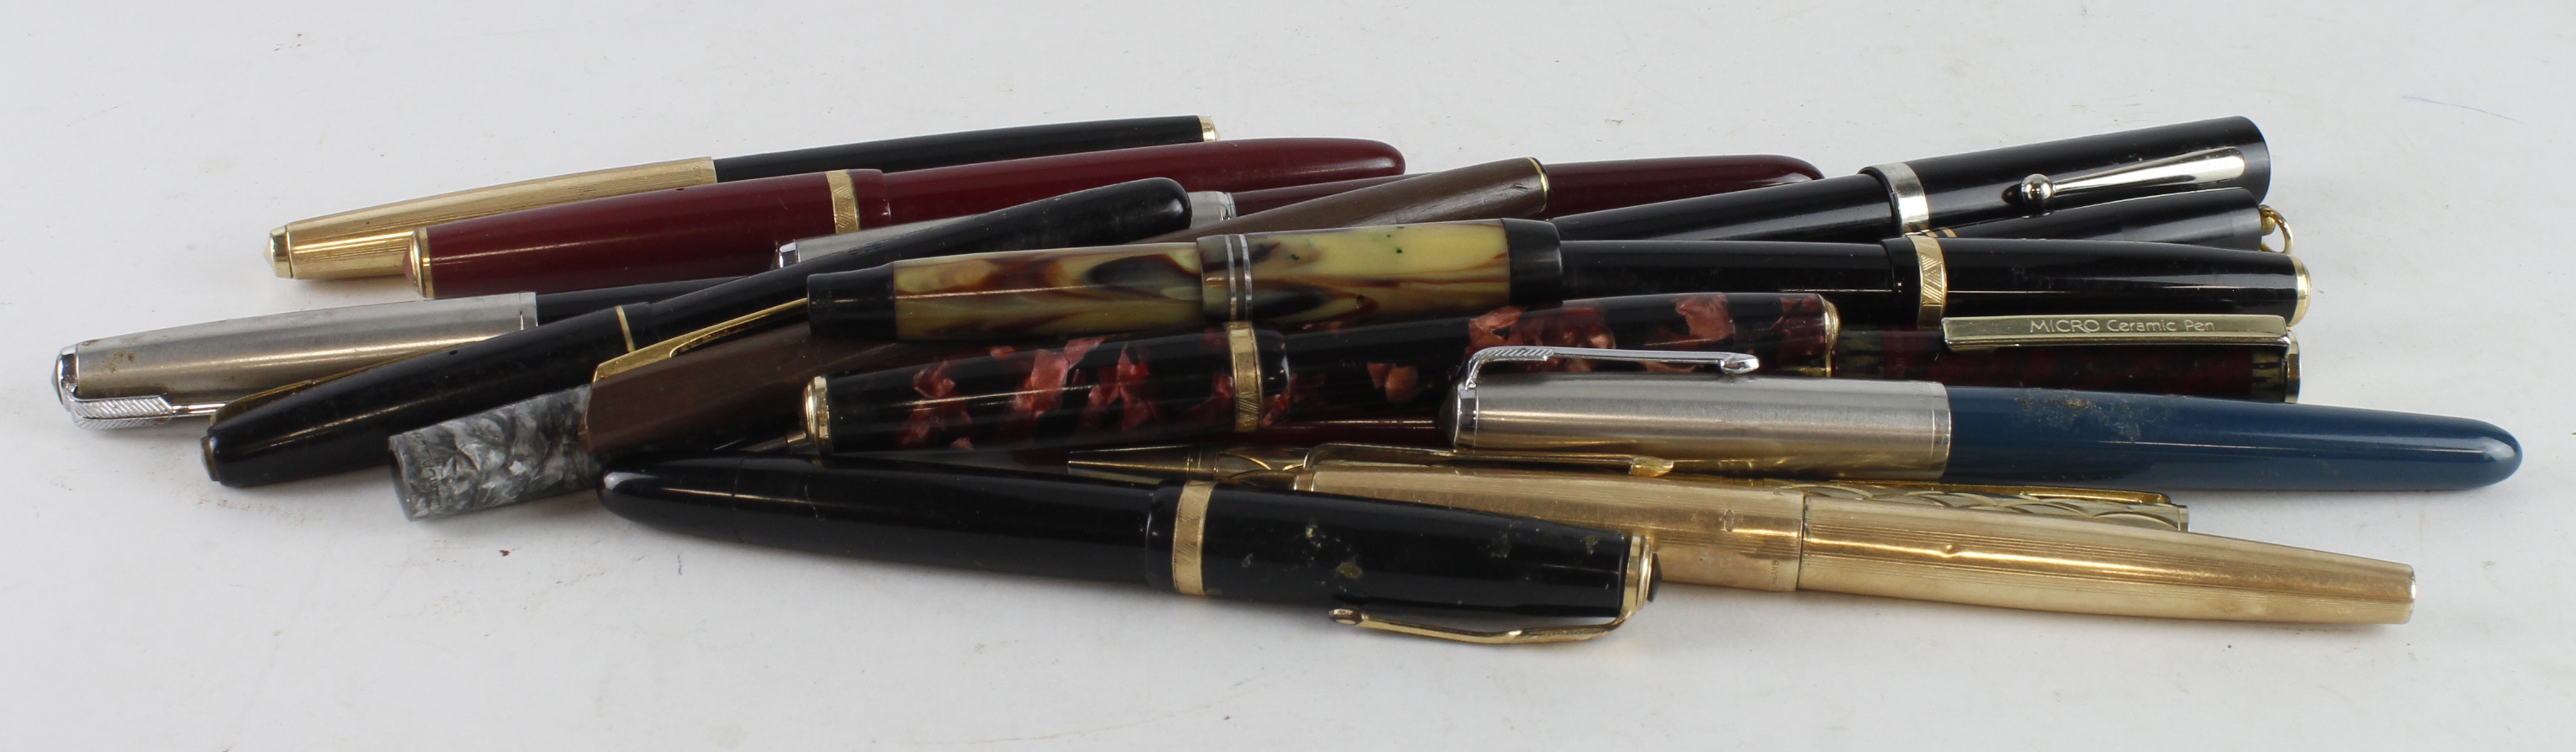 Pens. Nineteen fountain pens, ballpoint pens, etc., makers include Parker, Waterman, Sheaffer, etc.